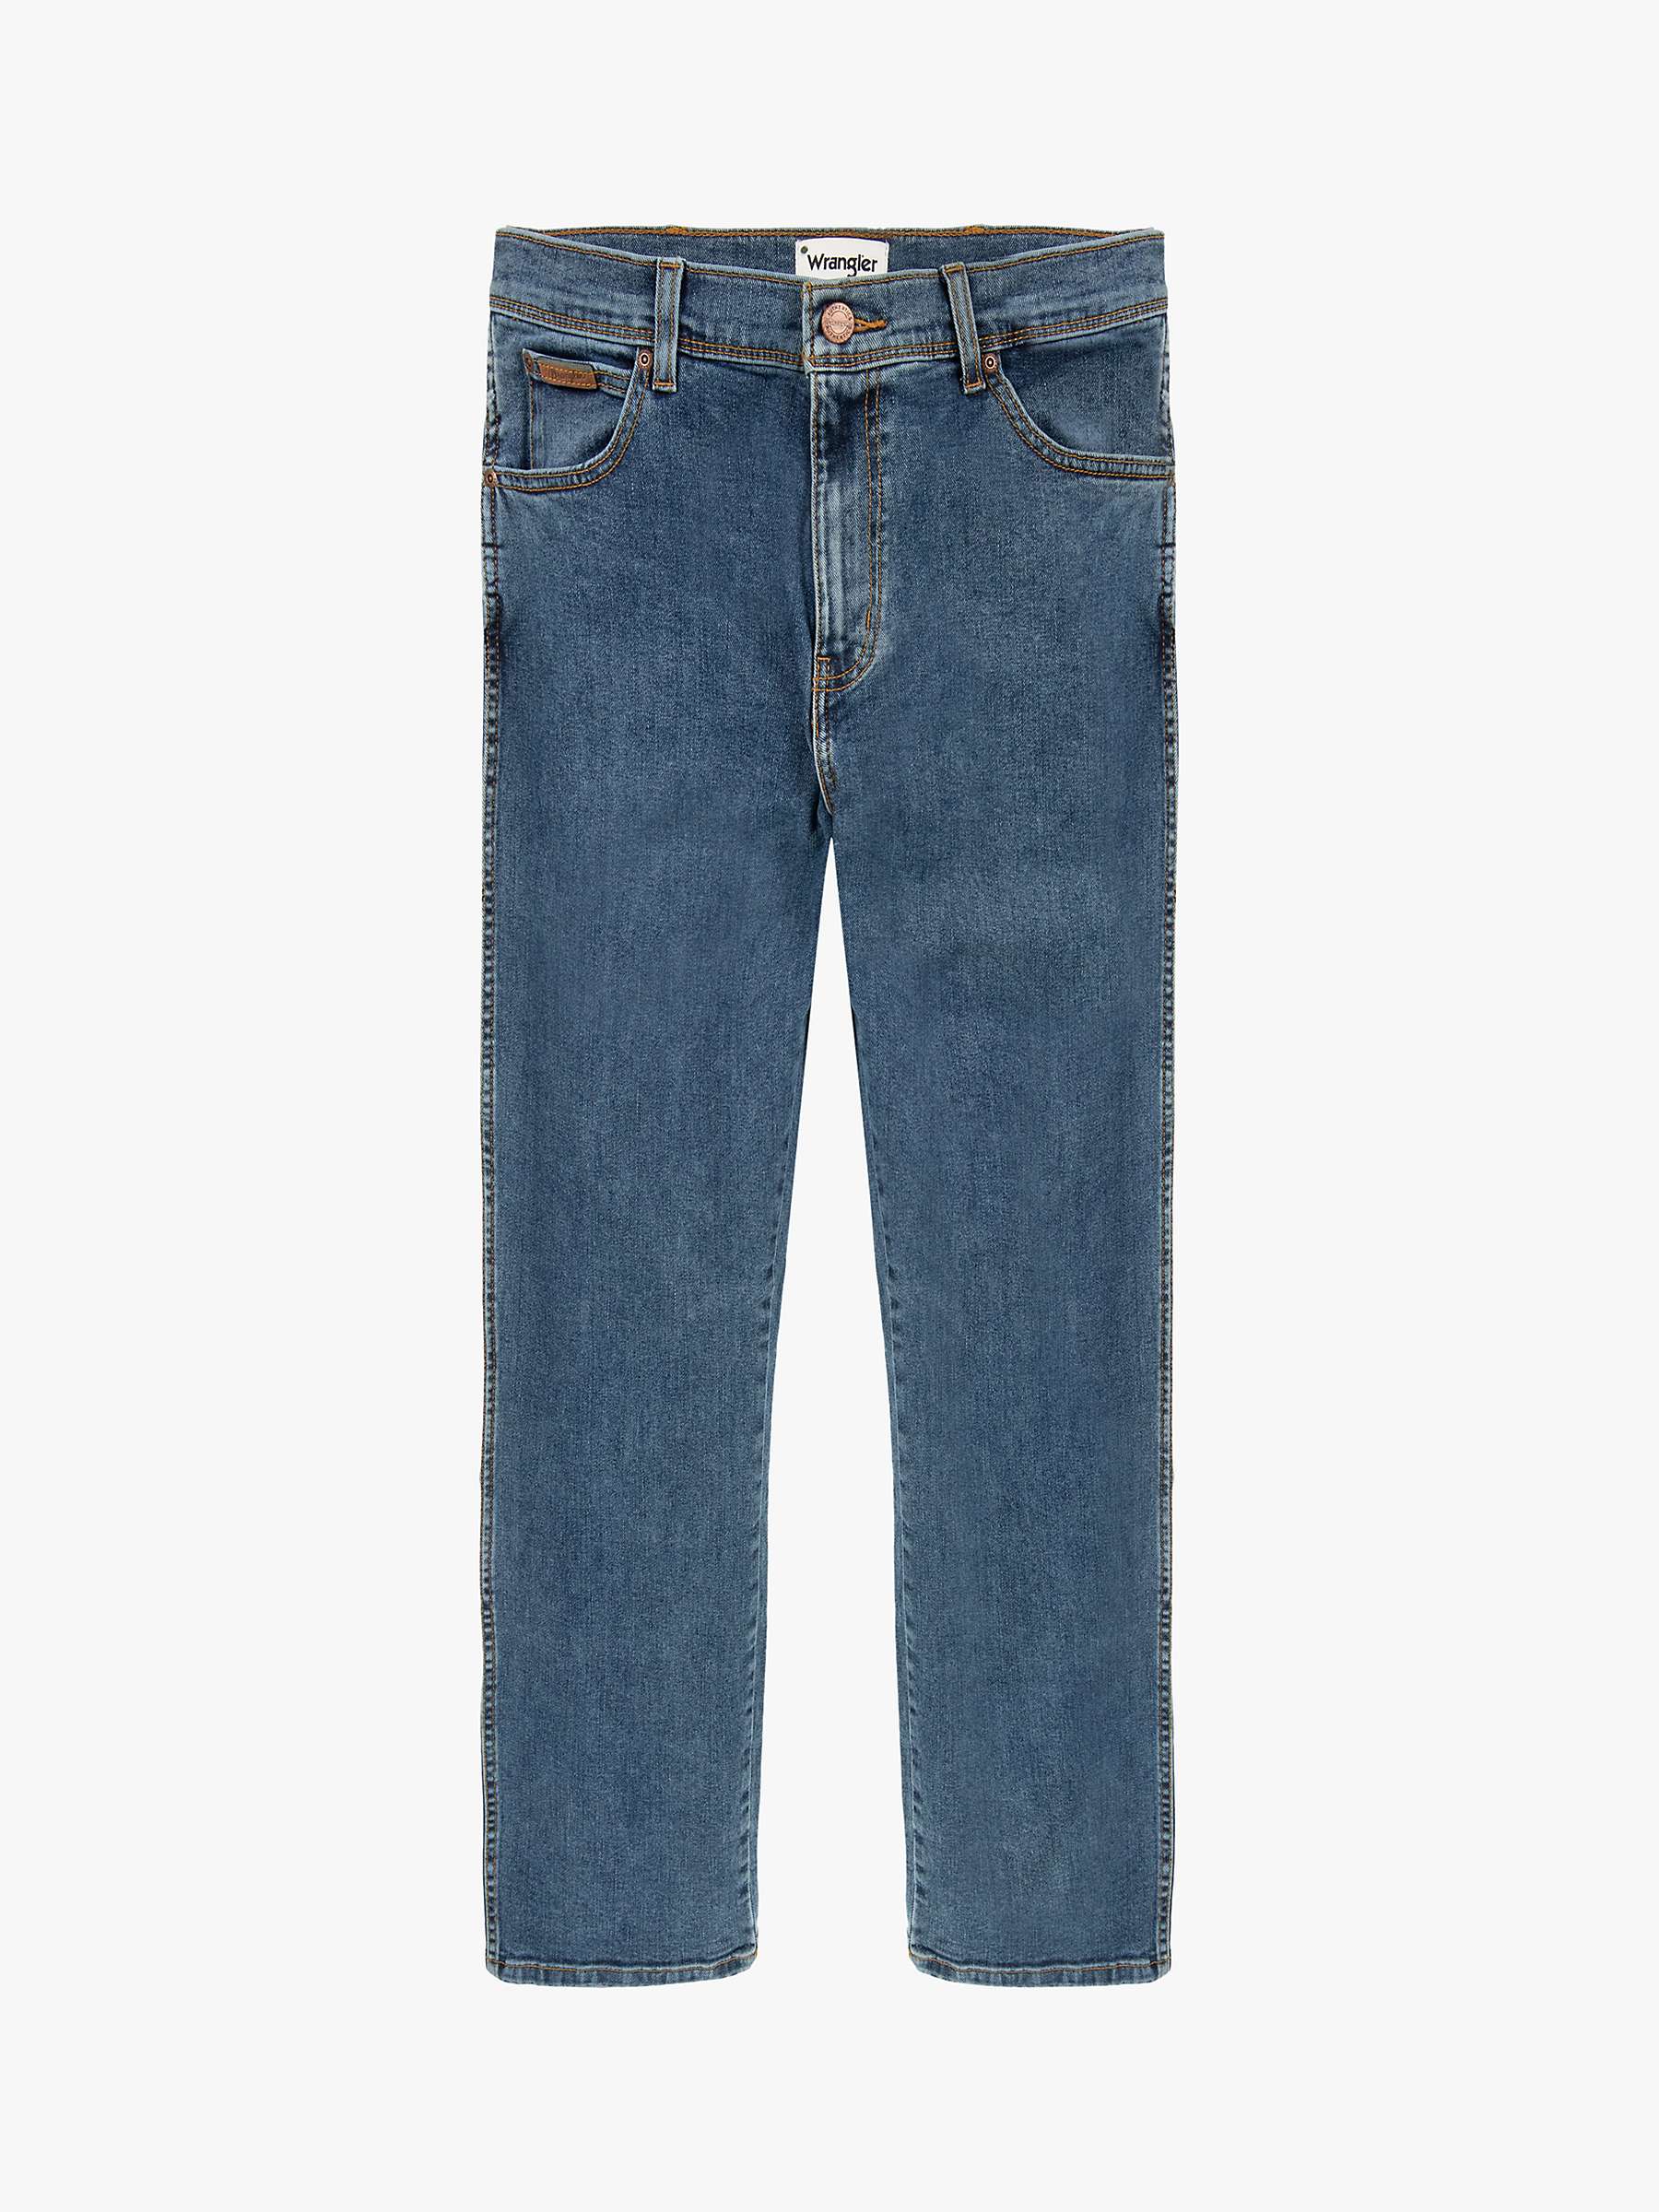 Wrangler Texas Regular Fit Stone Wash Jeans, Blue at John Lewis & Partners